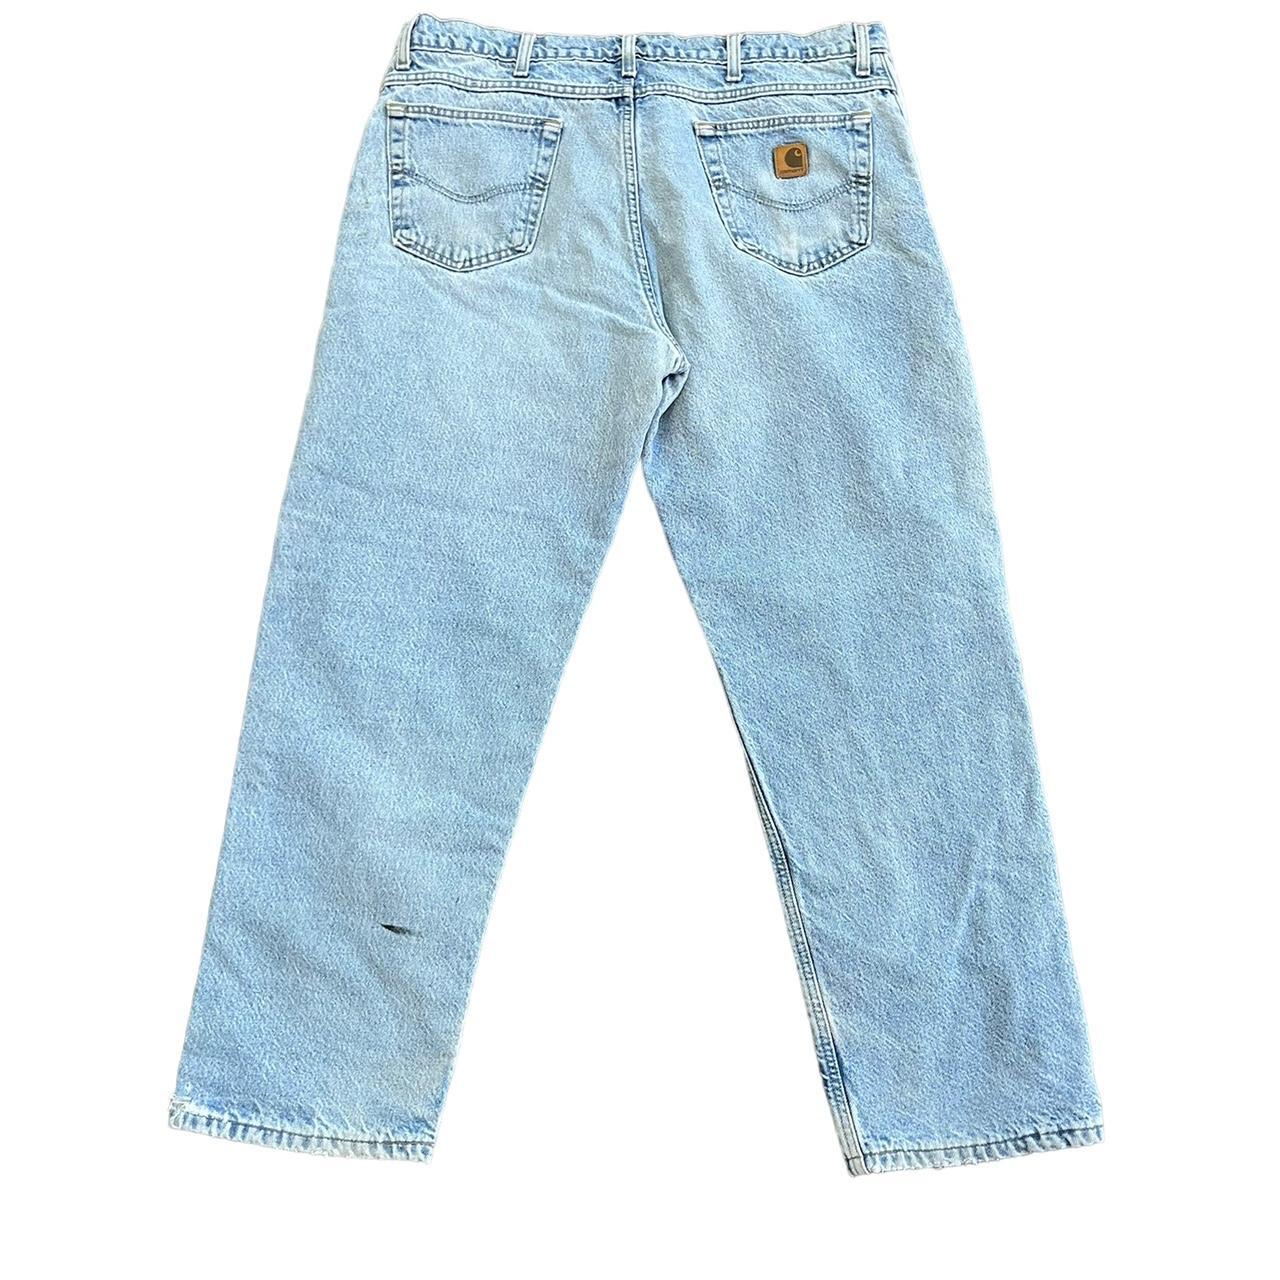 Carhartt Bleach Wash Flannel Lined Work Jeans Light... - Depop